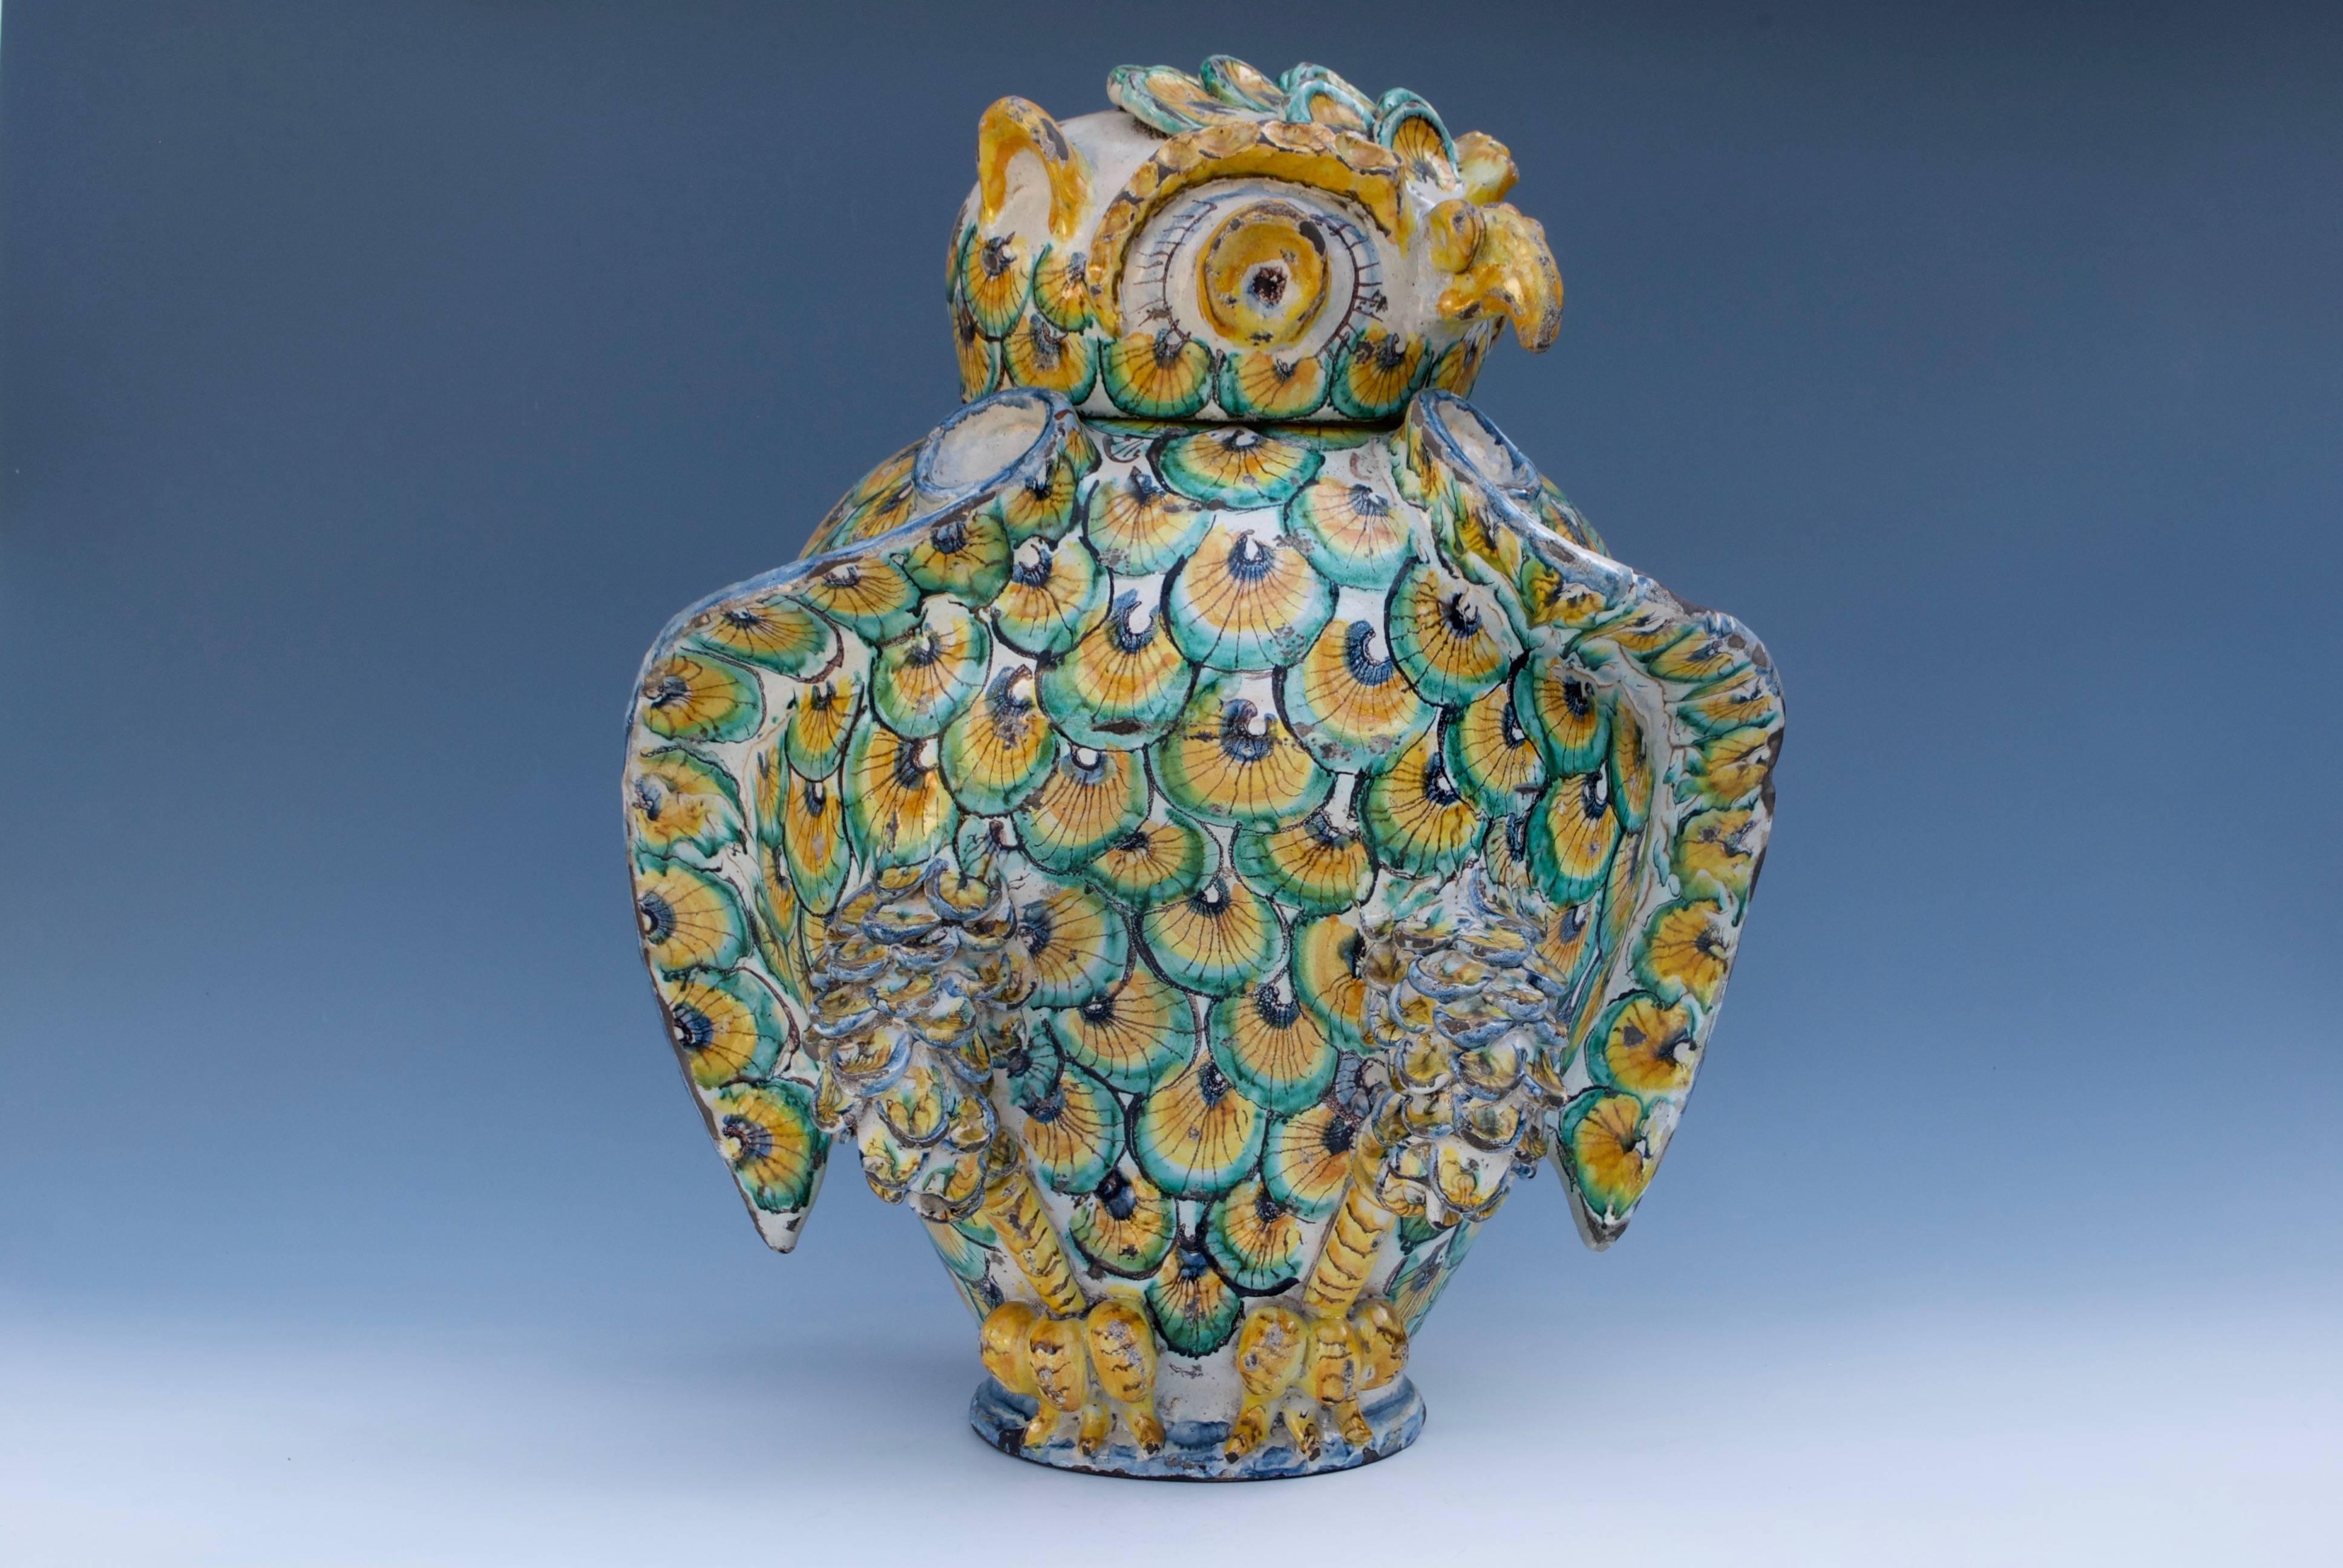 An impressive Majolica jar of an owl with polychrome decoro.